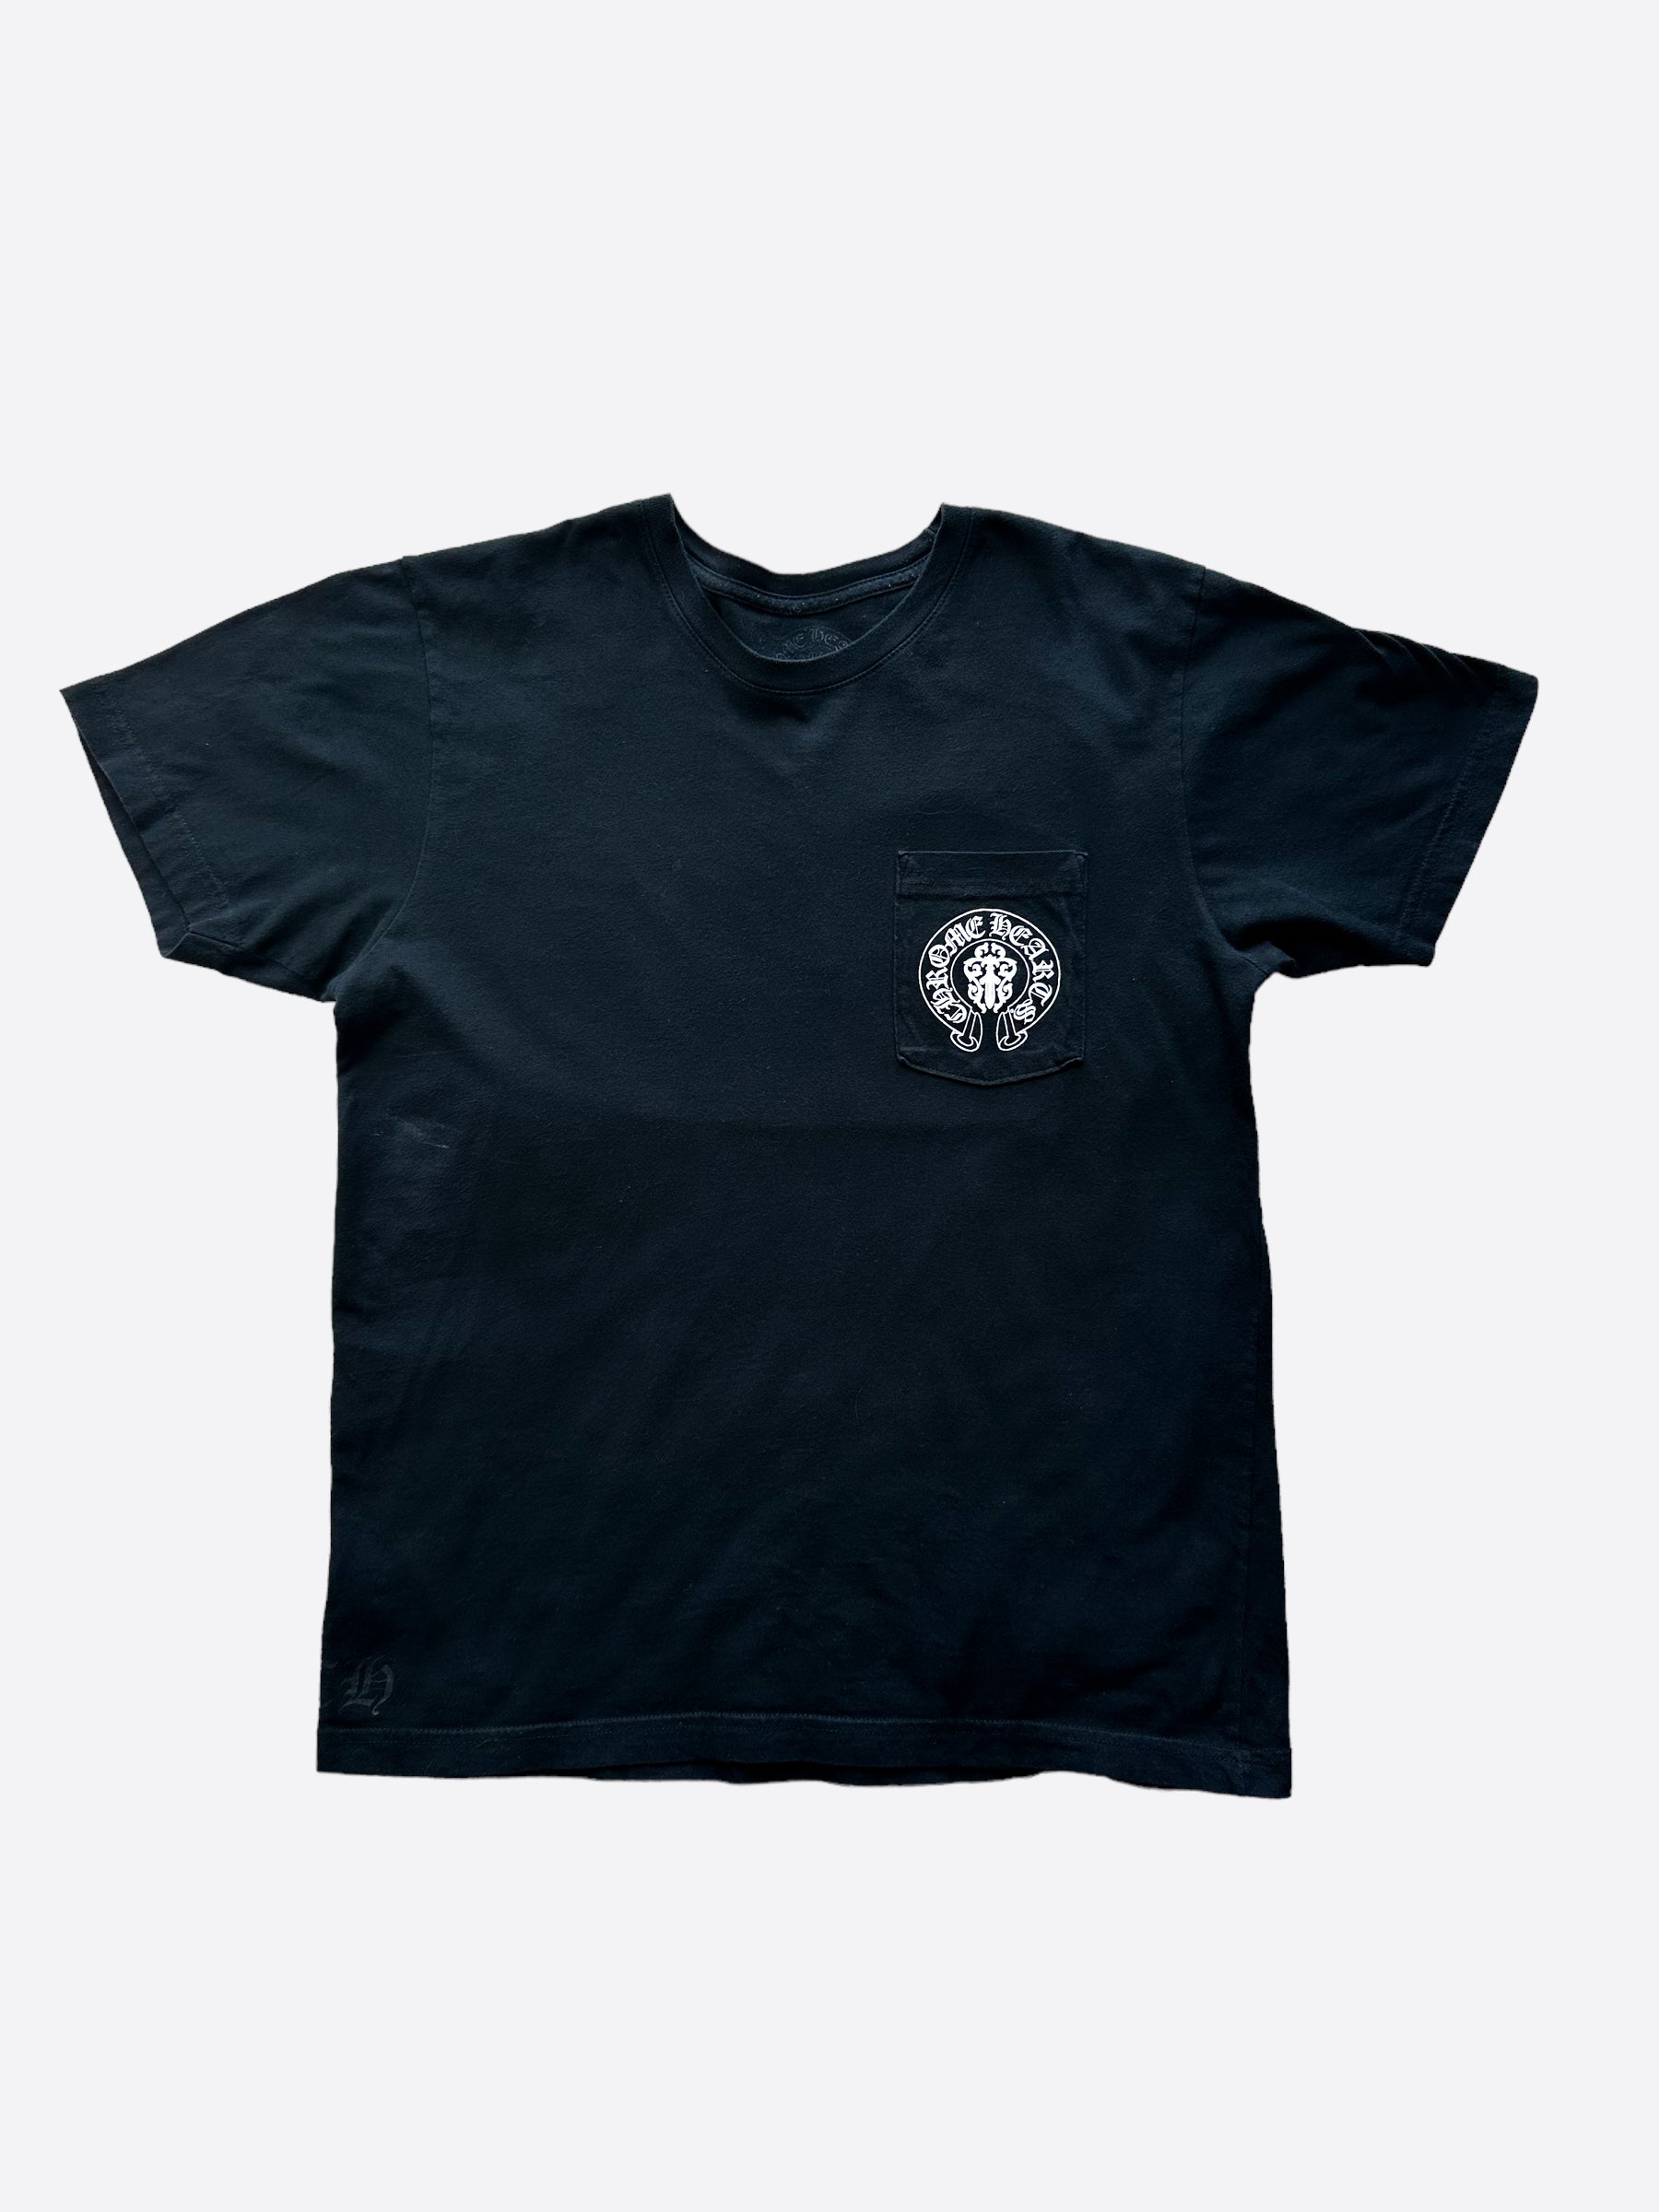 Chrome Hearts Black USA Flag T-Shirt